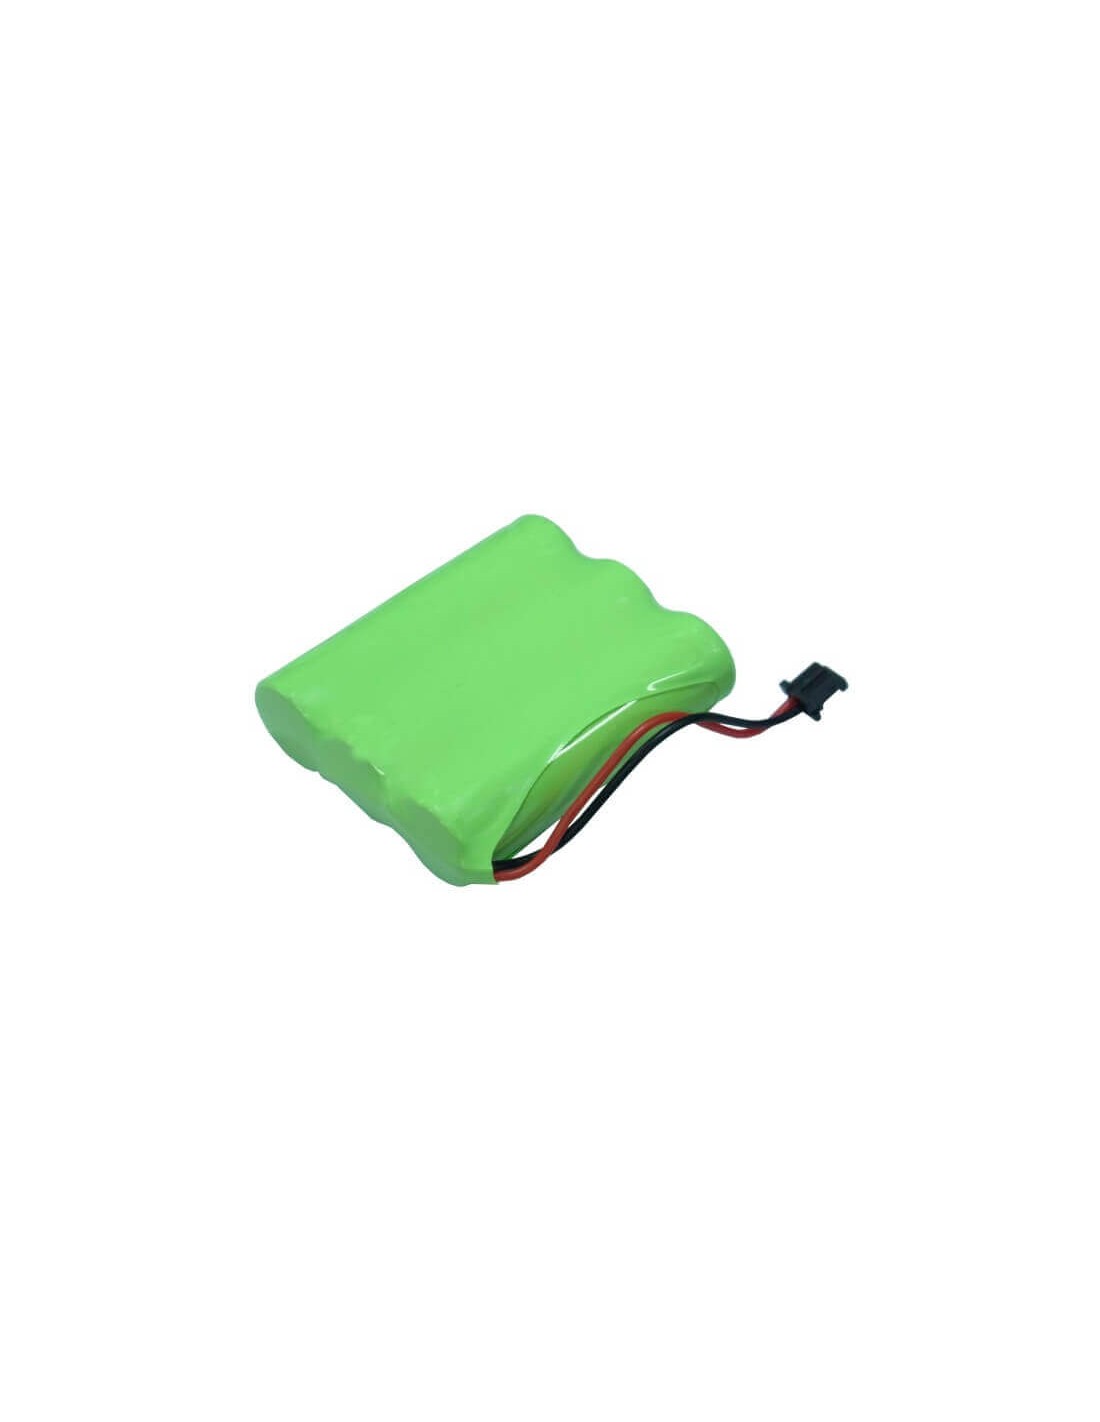 Battery for Stabo, Sigma 1000, St970 3.6V, 1200mAh - 4.32Wh